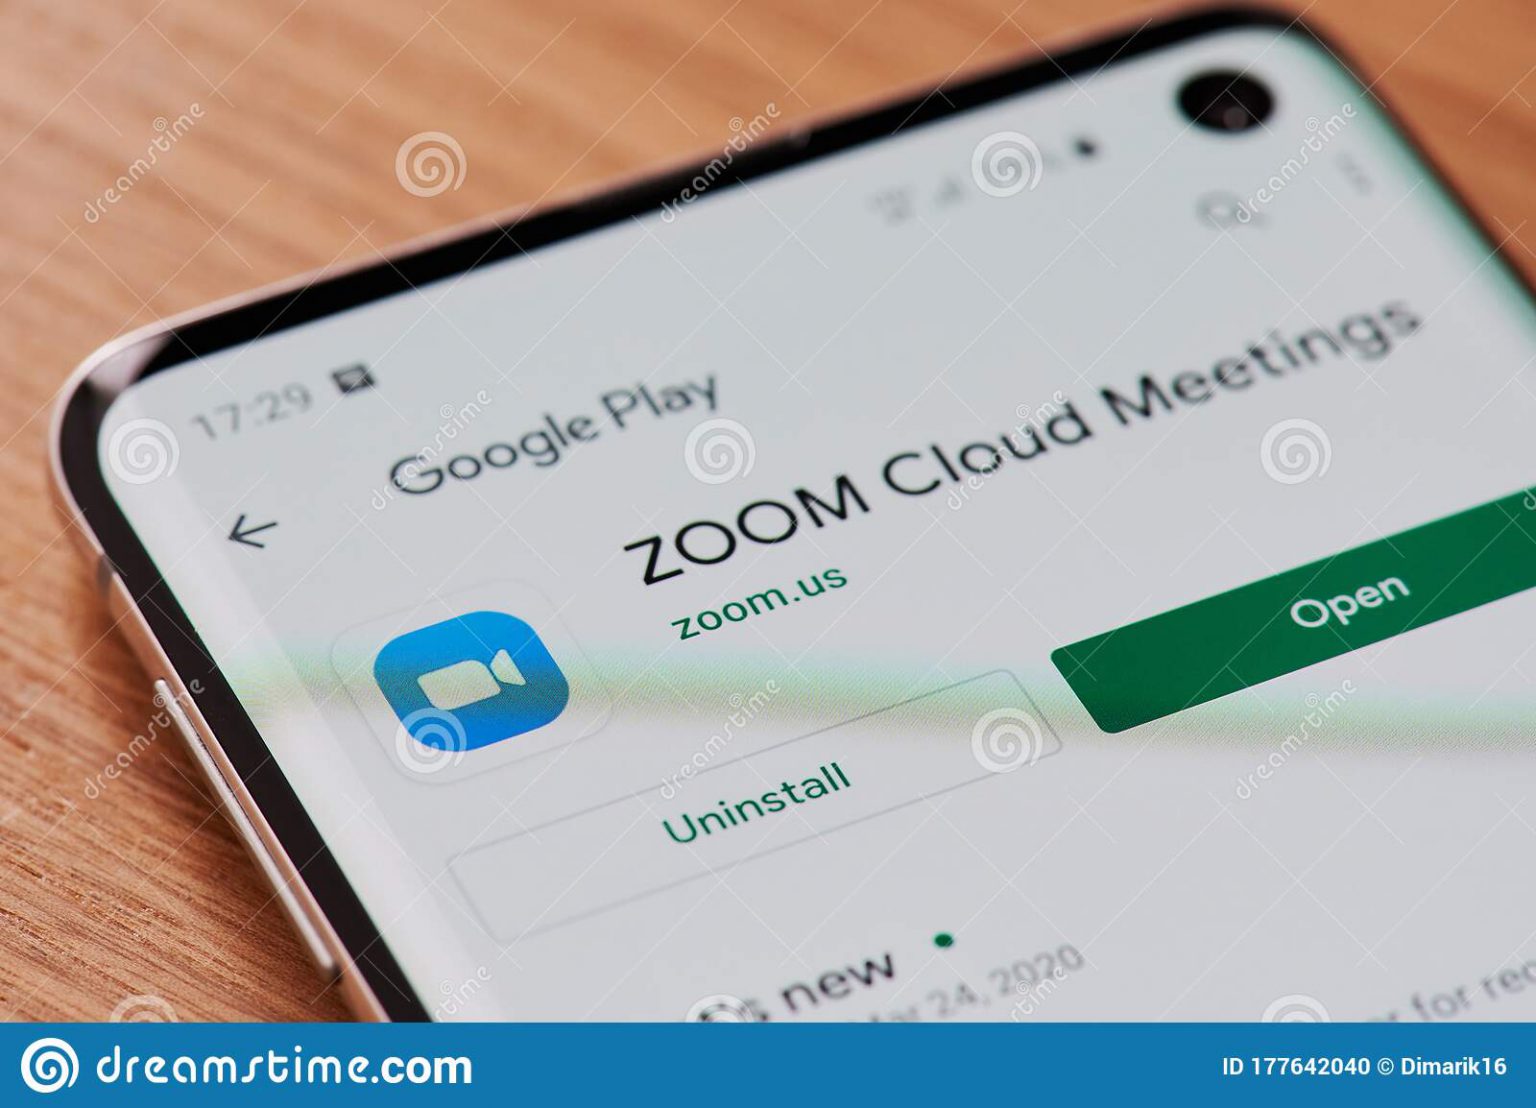 how to download zoom cloud meeting app in laptop